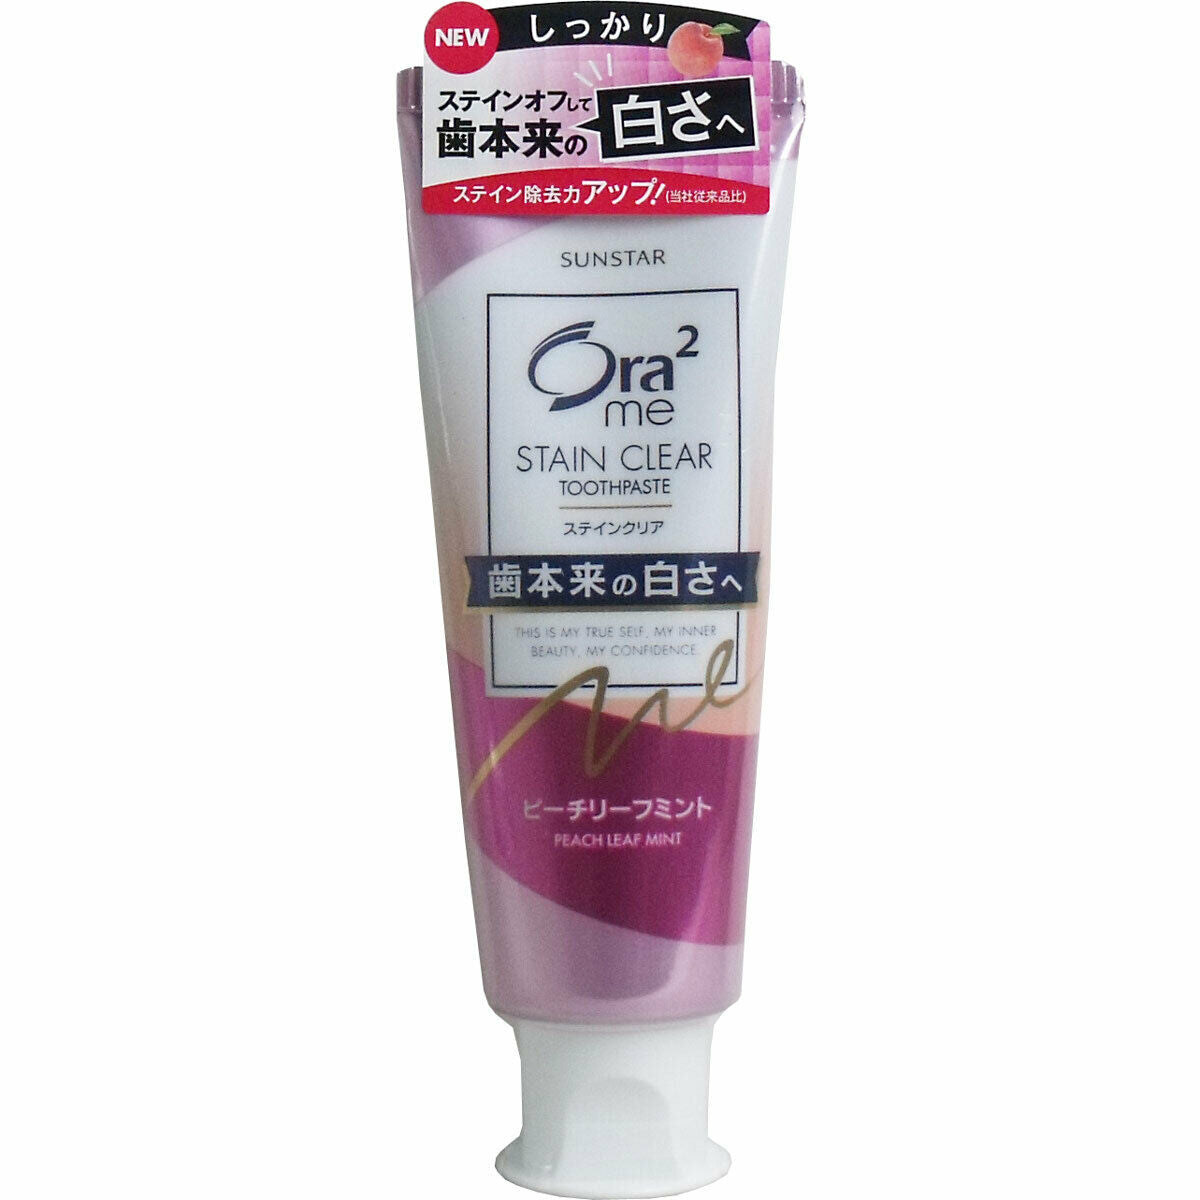 SUNSTAR Ora2 Stain Clear Whitening Toothpaste 130g Peach Leaf Mint Japan